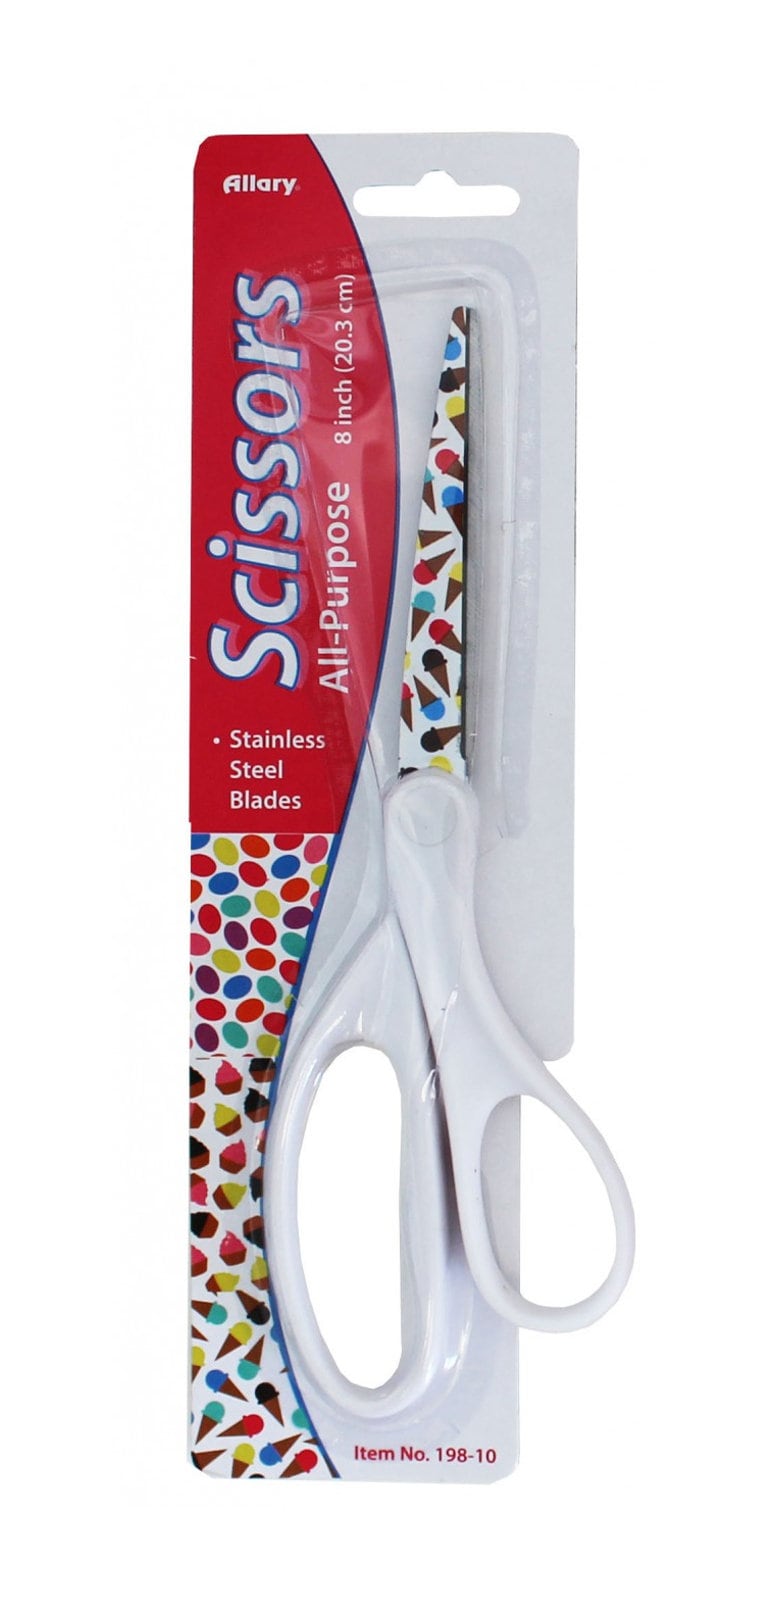 Fiskars Scissors Classic Multi-purpose Shears 17cm 6.5in Premium